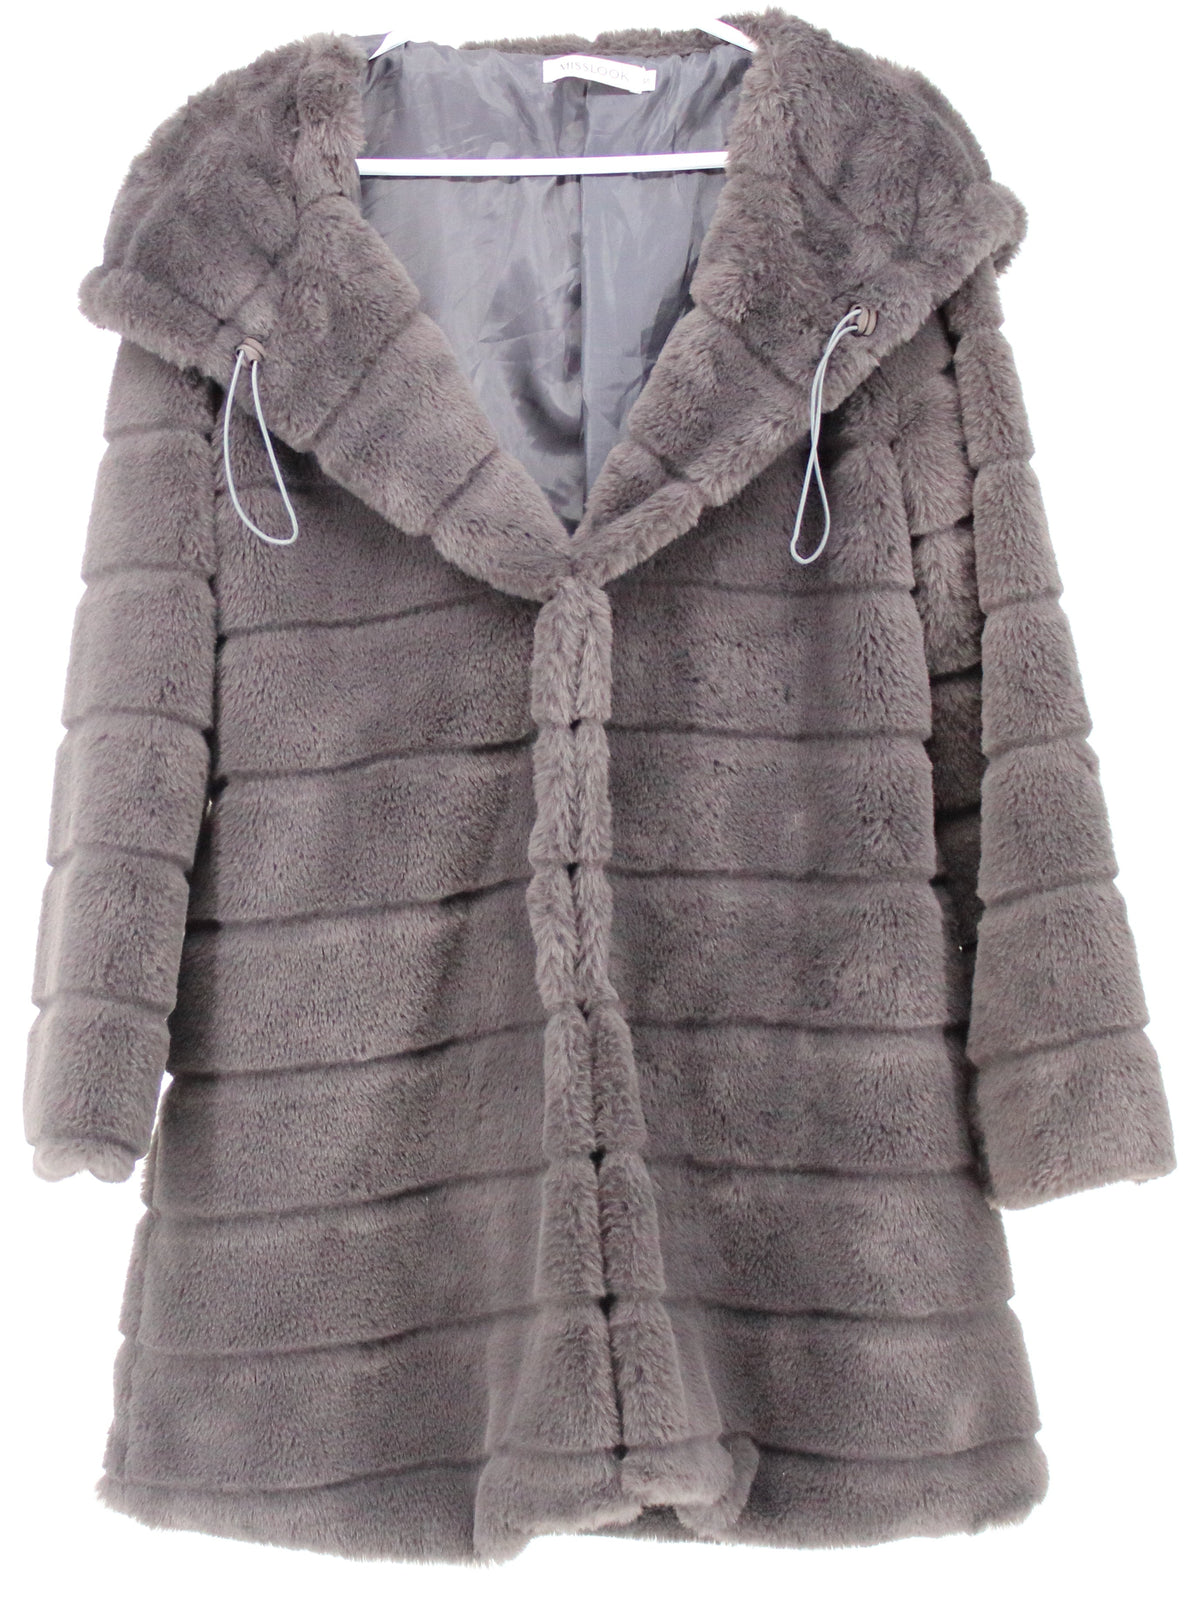 Misslook Grey Faux Fur Women's Hooded Coat